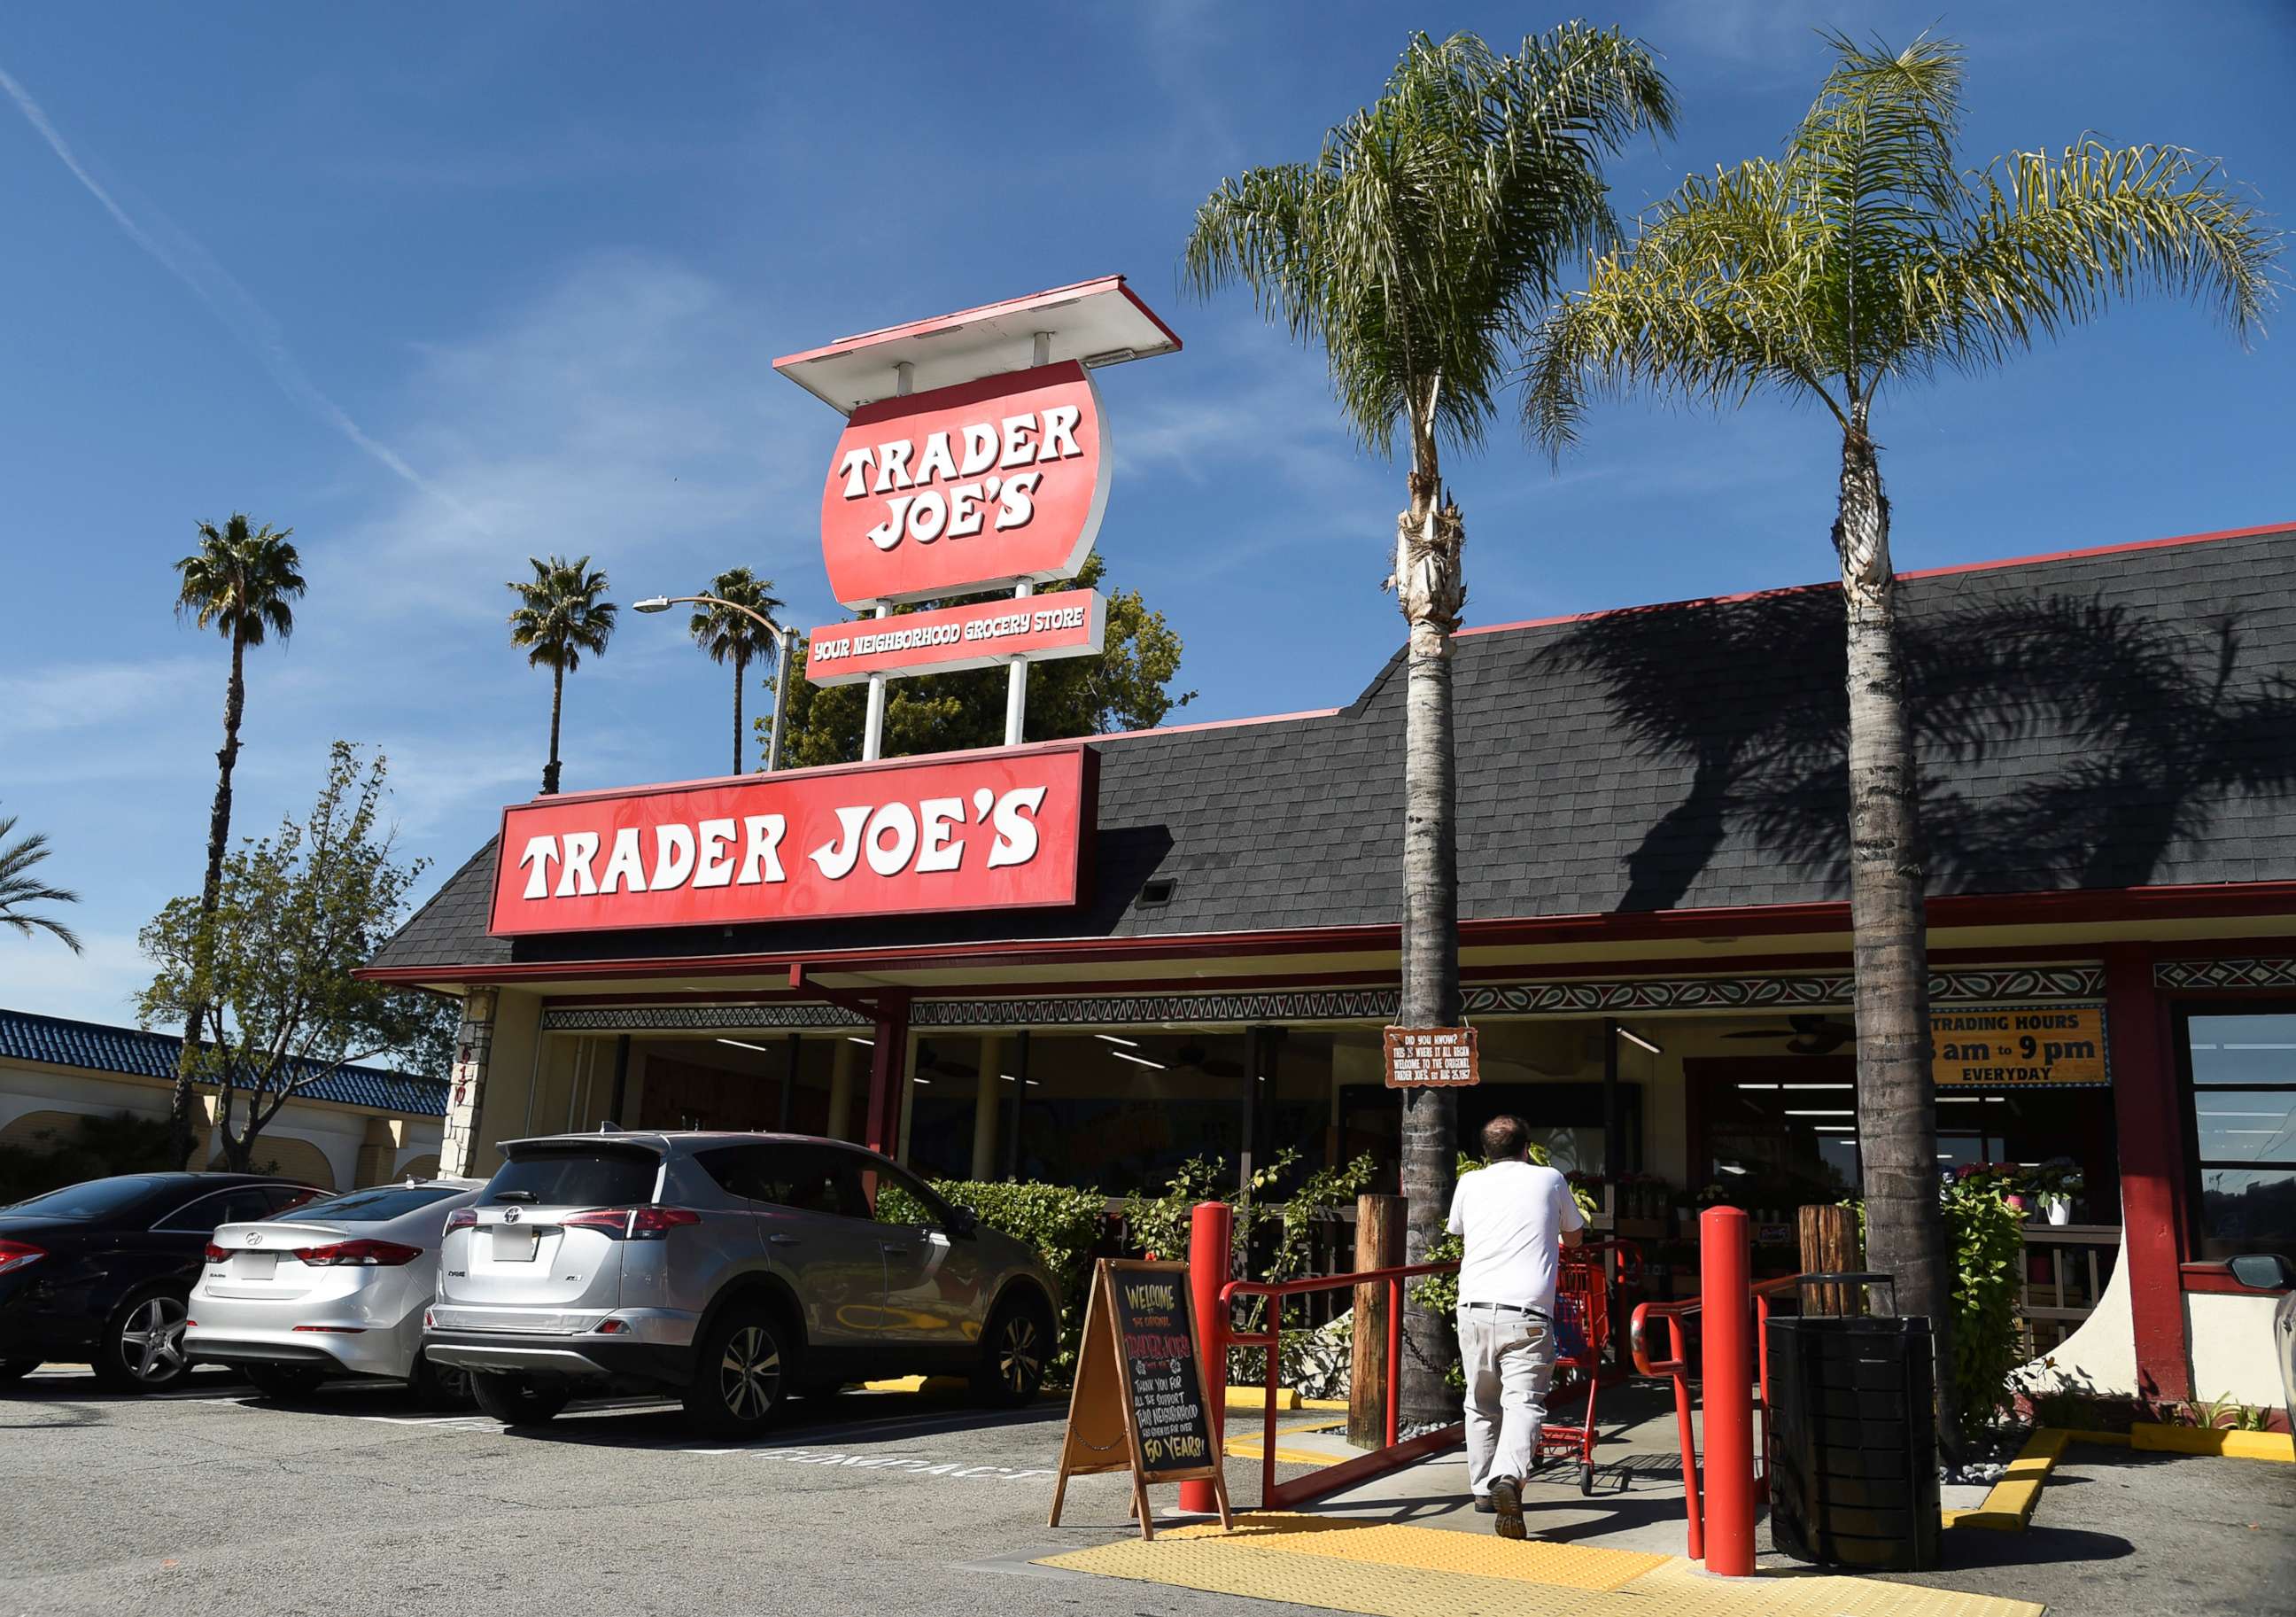 PHOTO: Trader Joe's grocery store in Pasadena, Calif., Feb. 26, 2020.